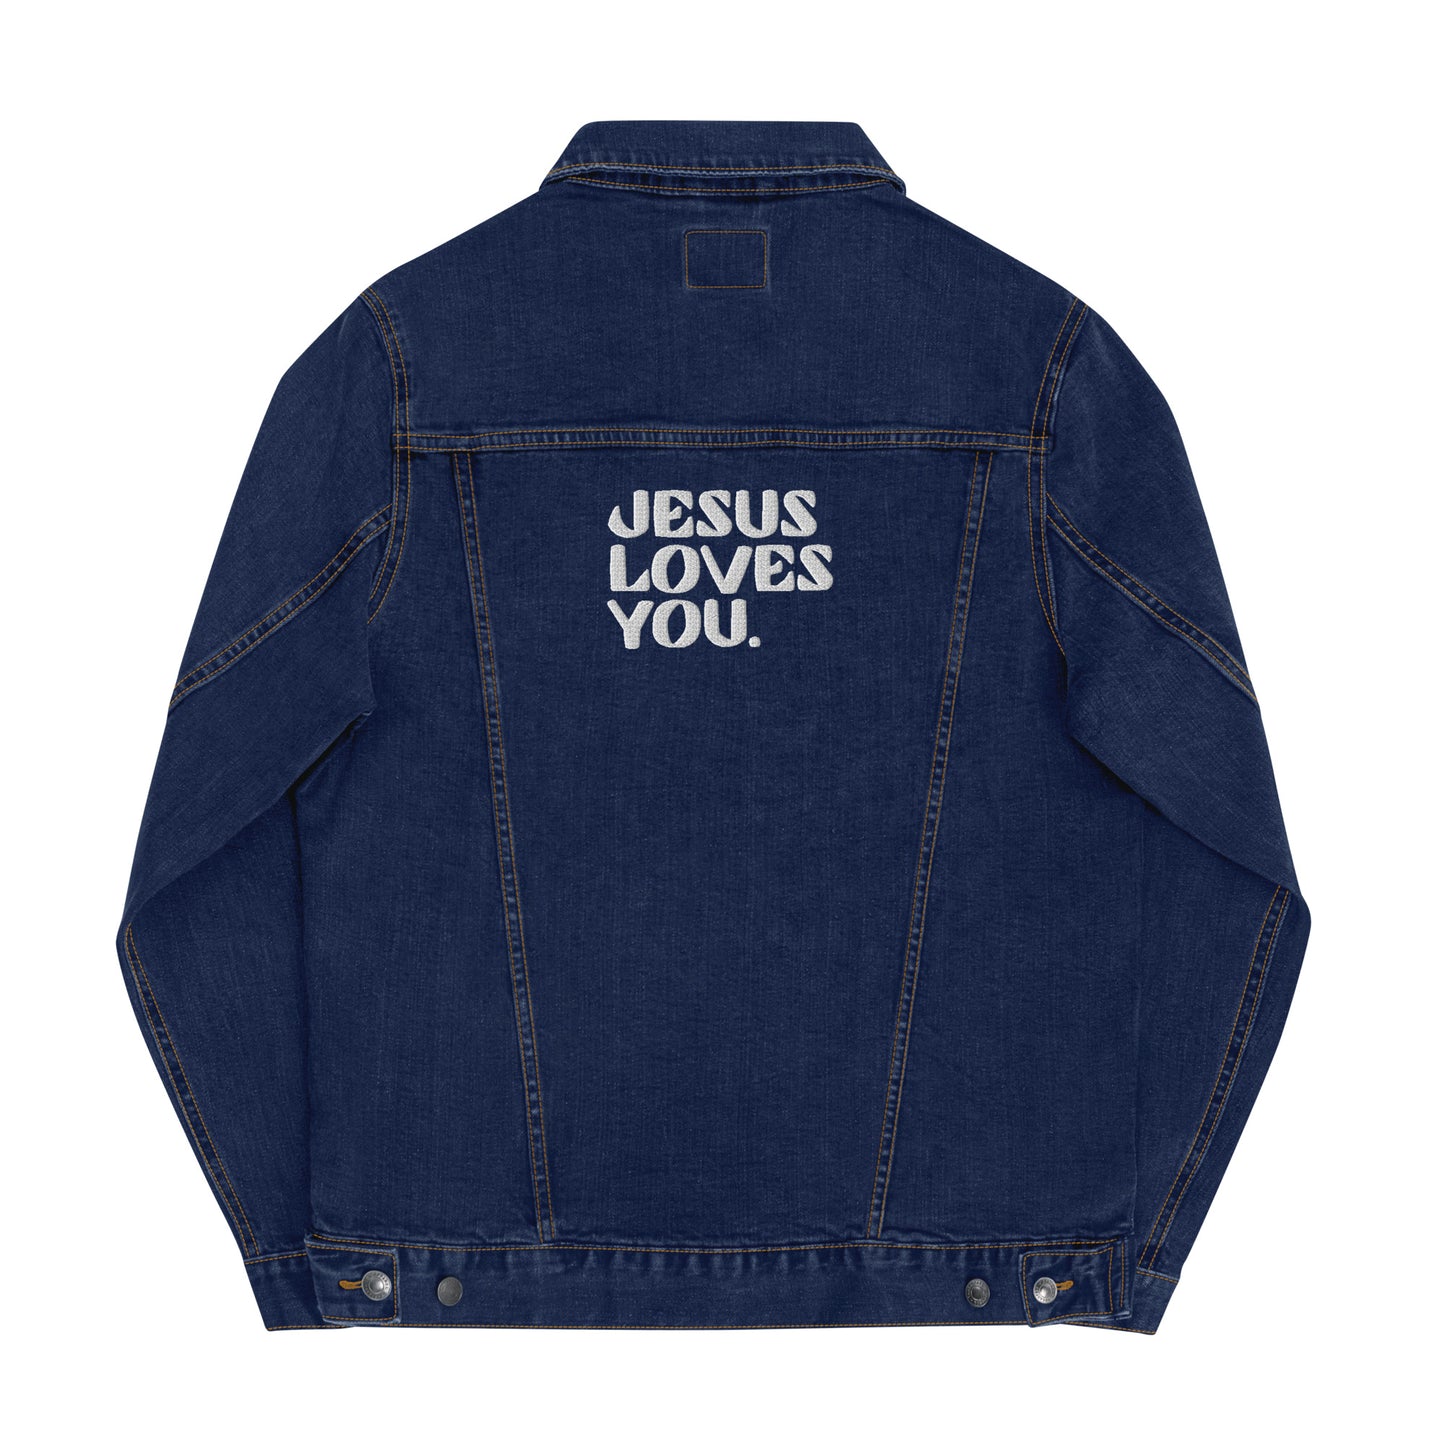 "Jesus Loves You" Unisex denim jacket